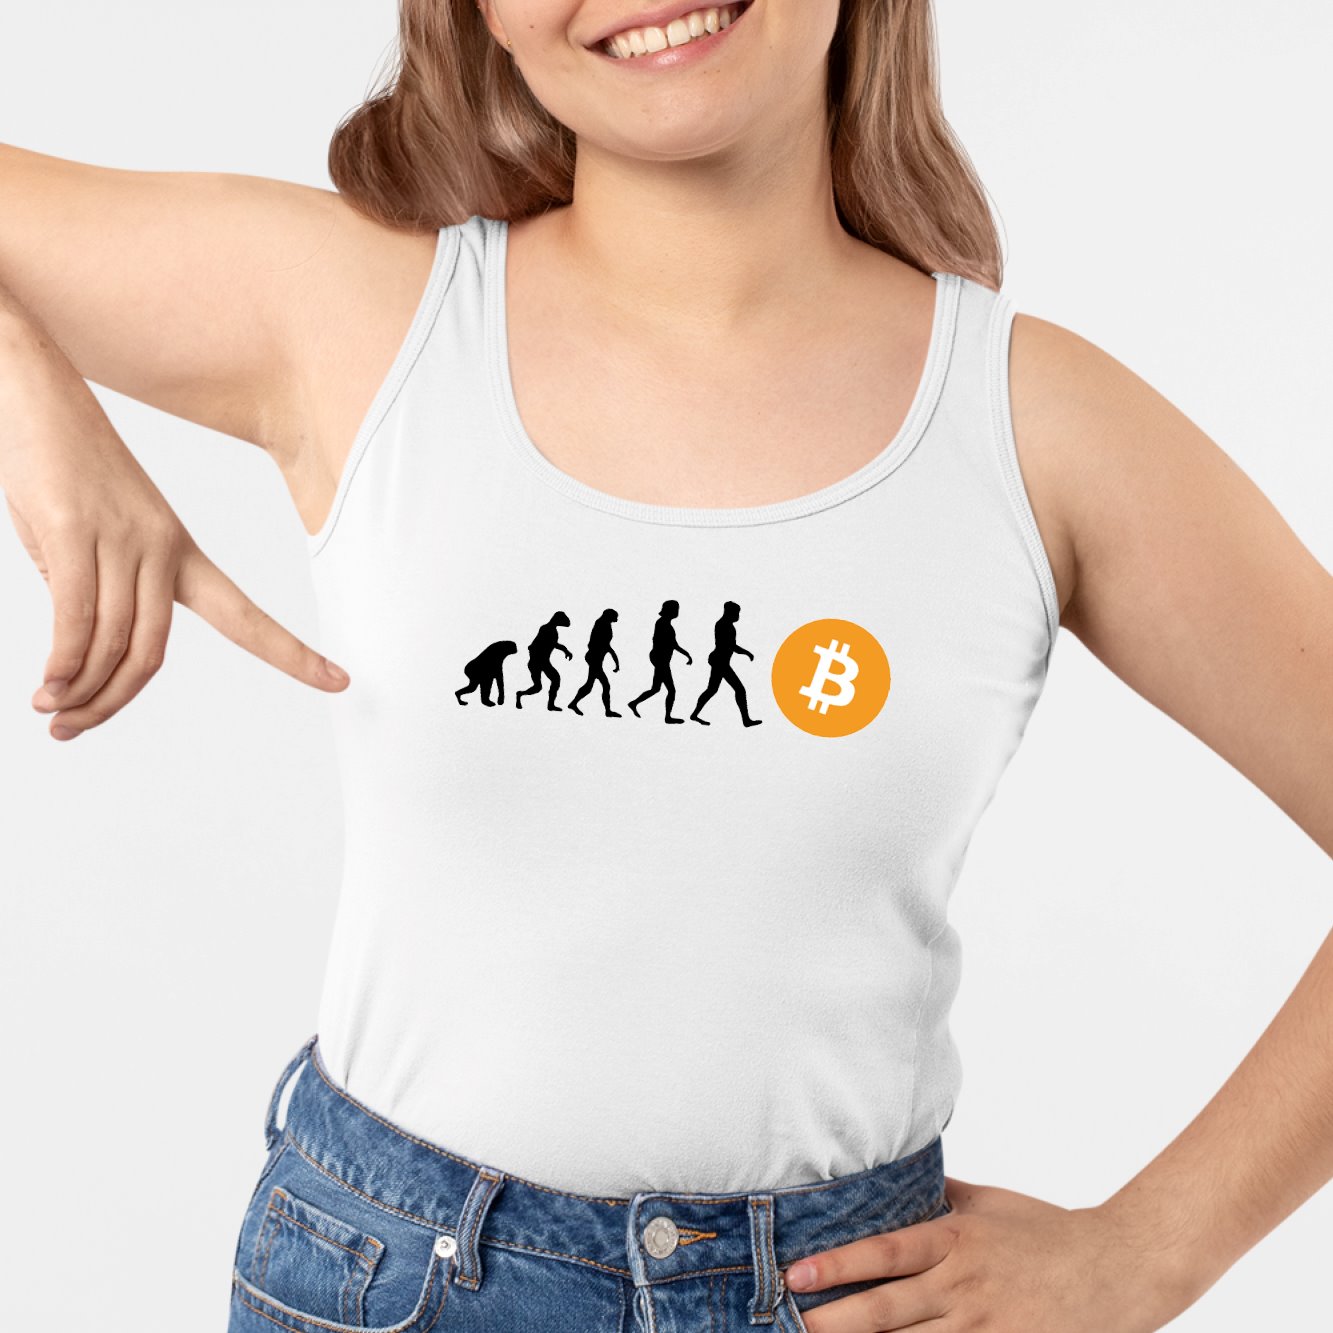 Débardeur Femme Évolution Bitcoin Blanc